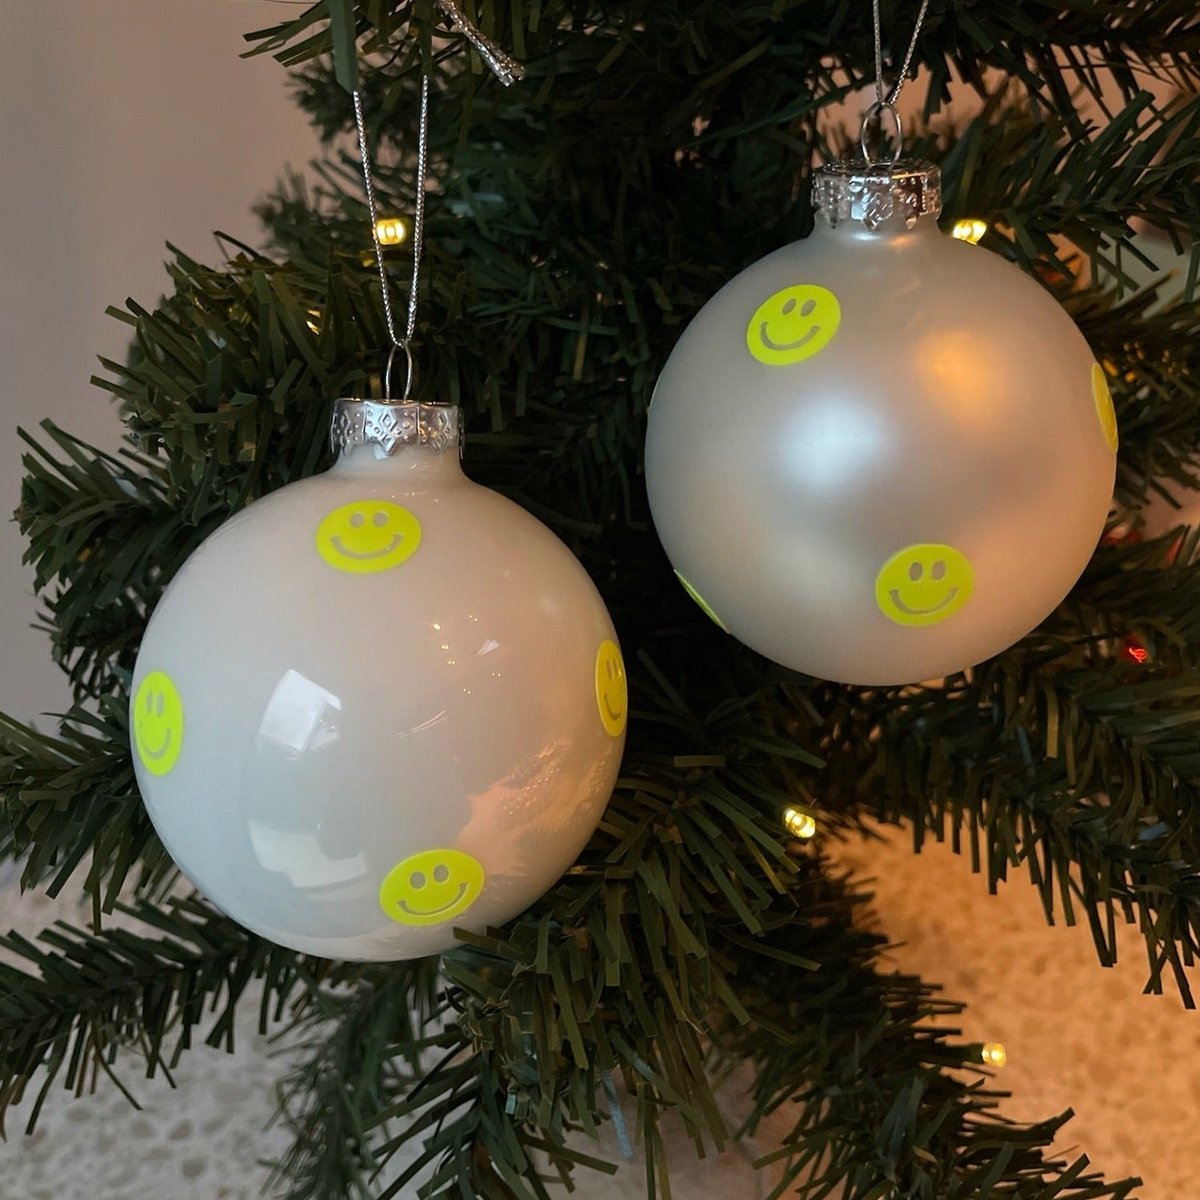 Smiley kerstballen - 2 stuks - 8cm - The Neon Yellow Christmas Smiles